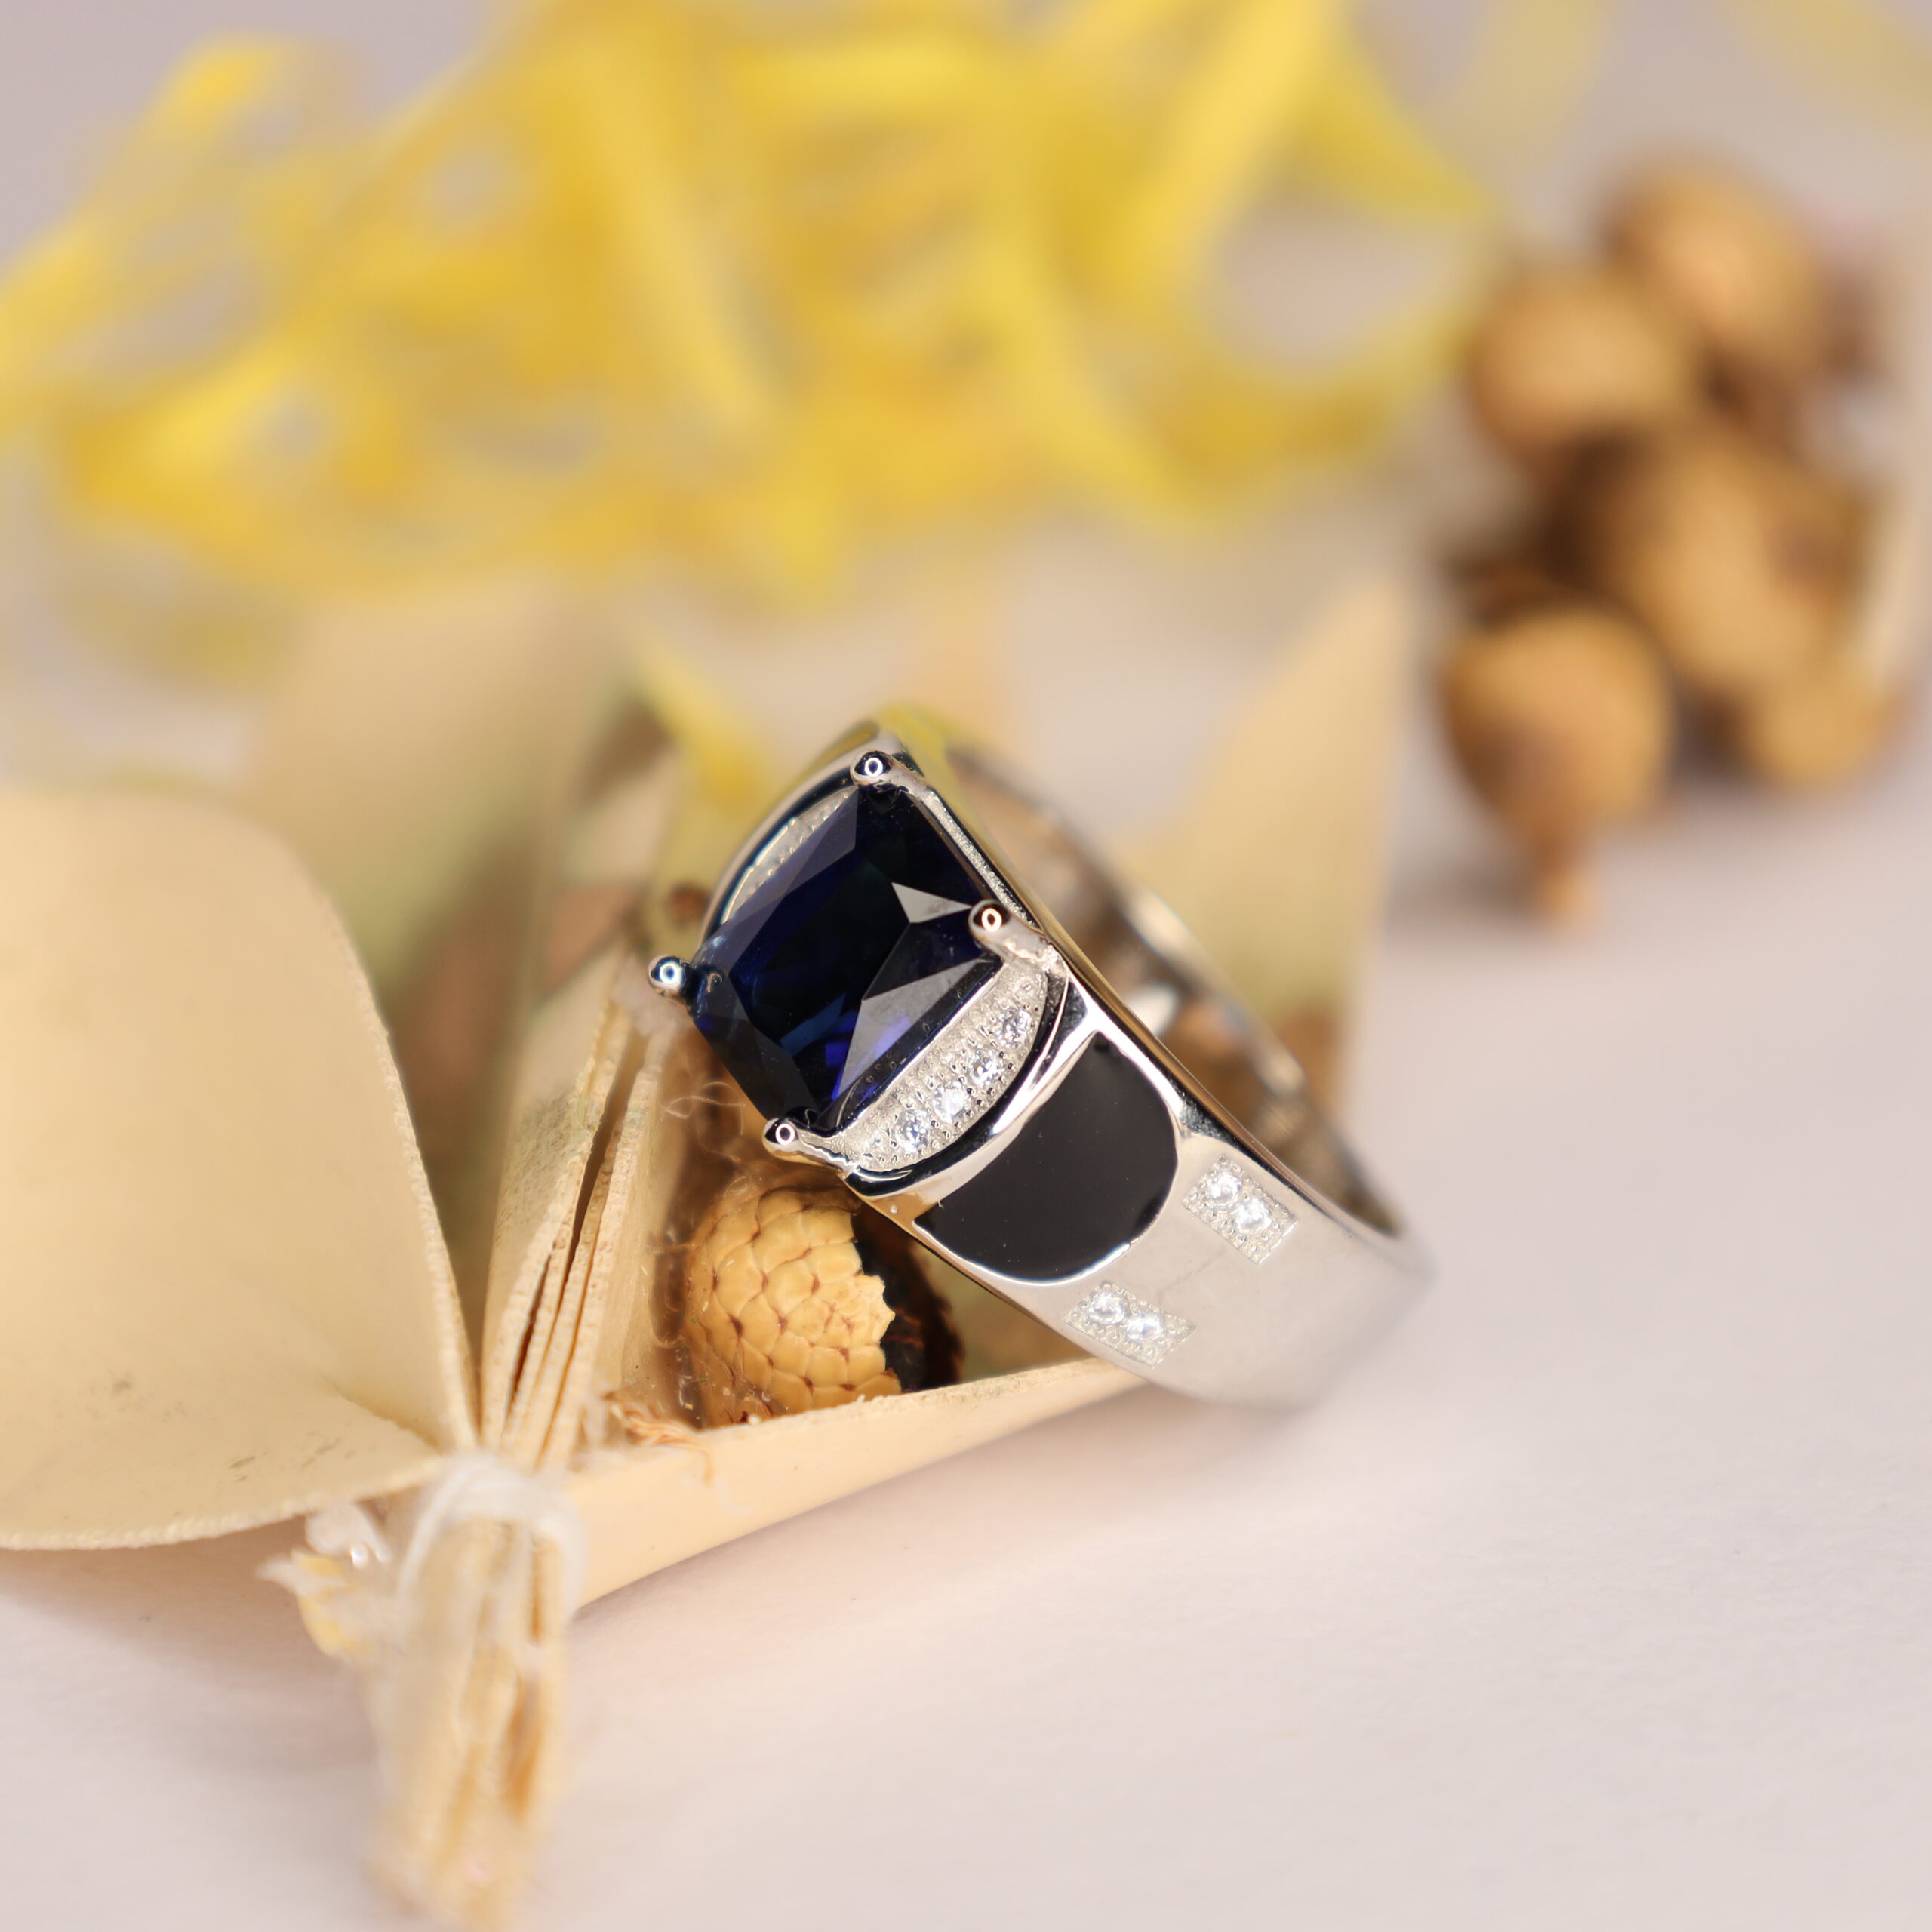 Ceylon Blue Sapphire(4.57Cts) - Buy Certified Natural Gemstone Online